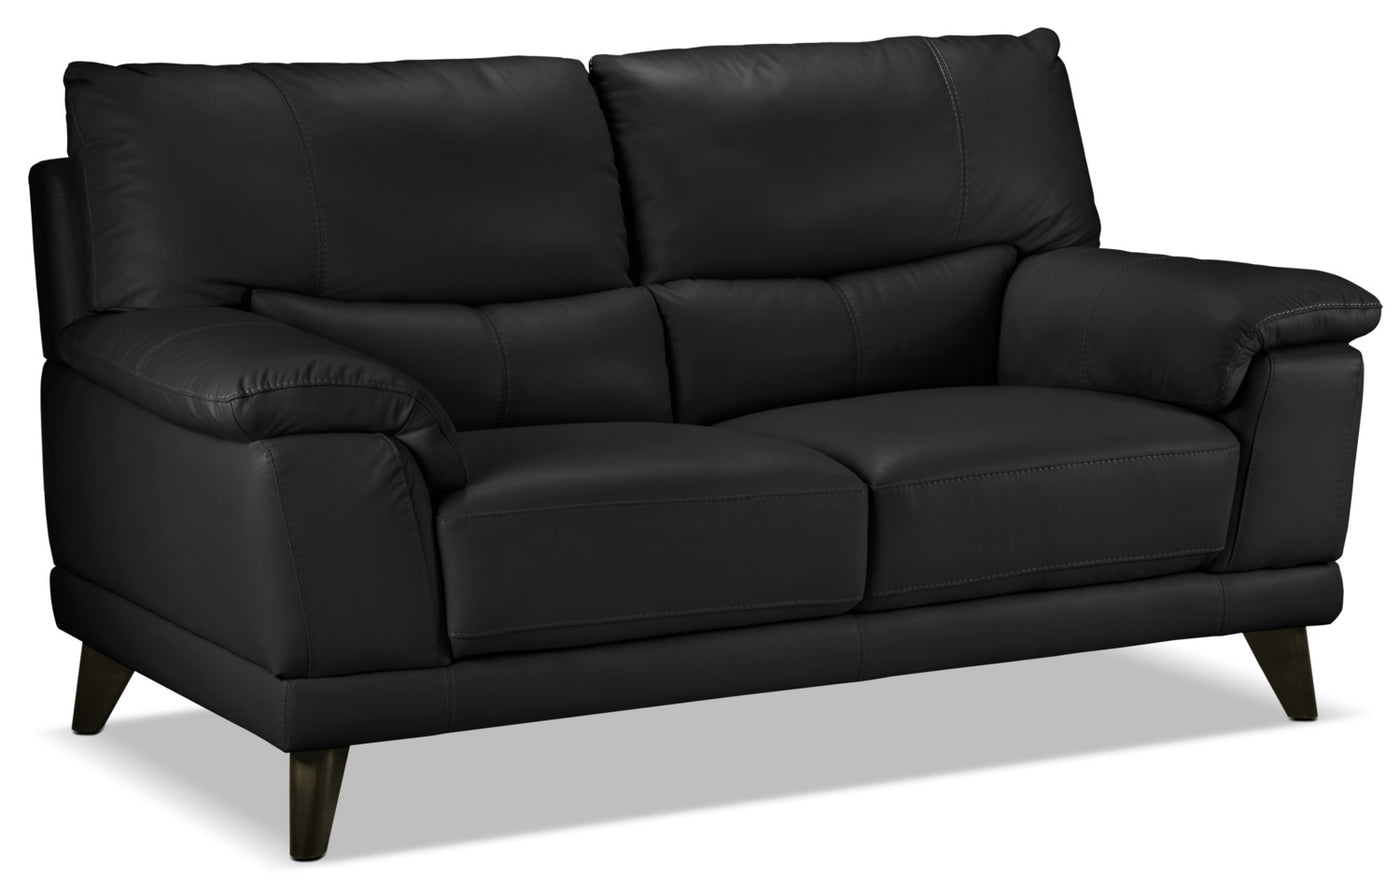 Braylon Leather Sofa and Loveseat Set - Classic Black